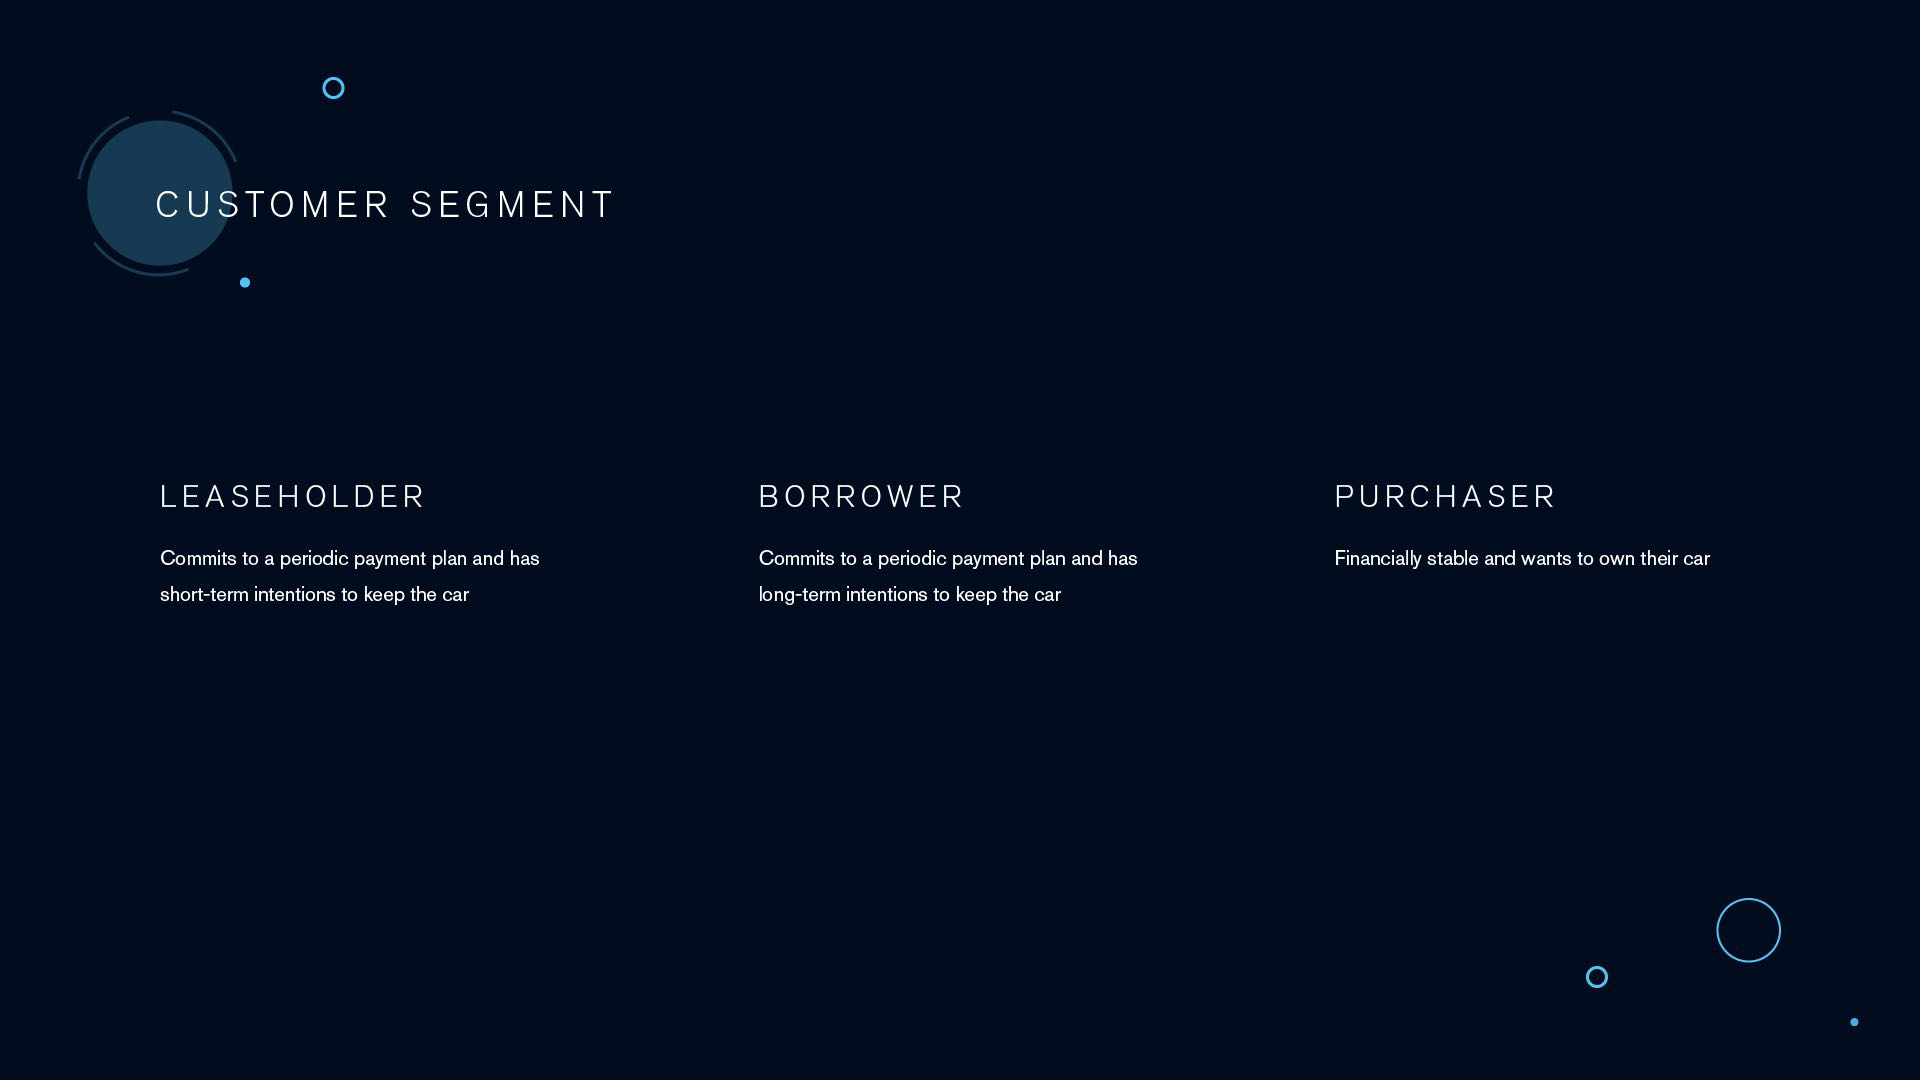 slide deck image of 3 different customer segments